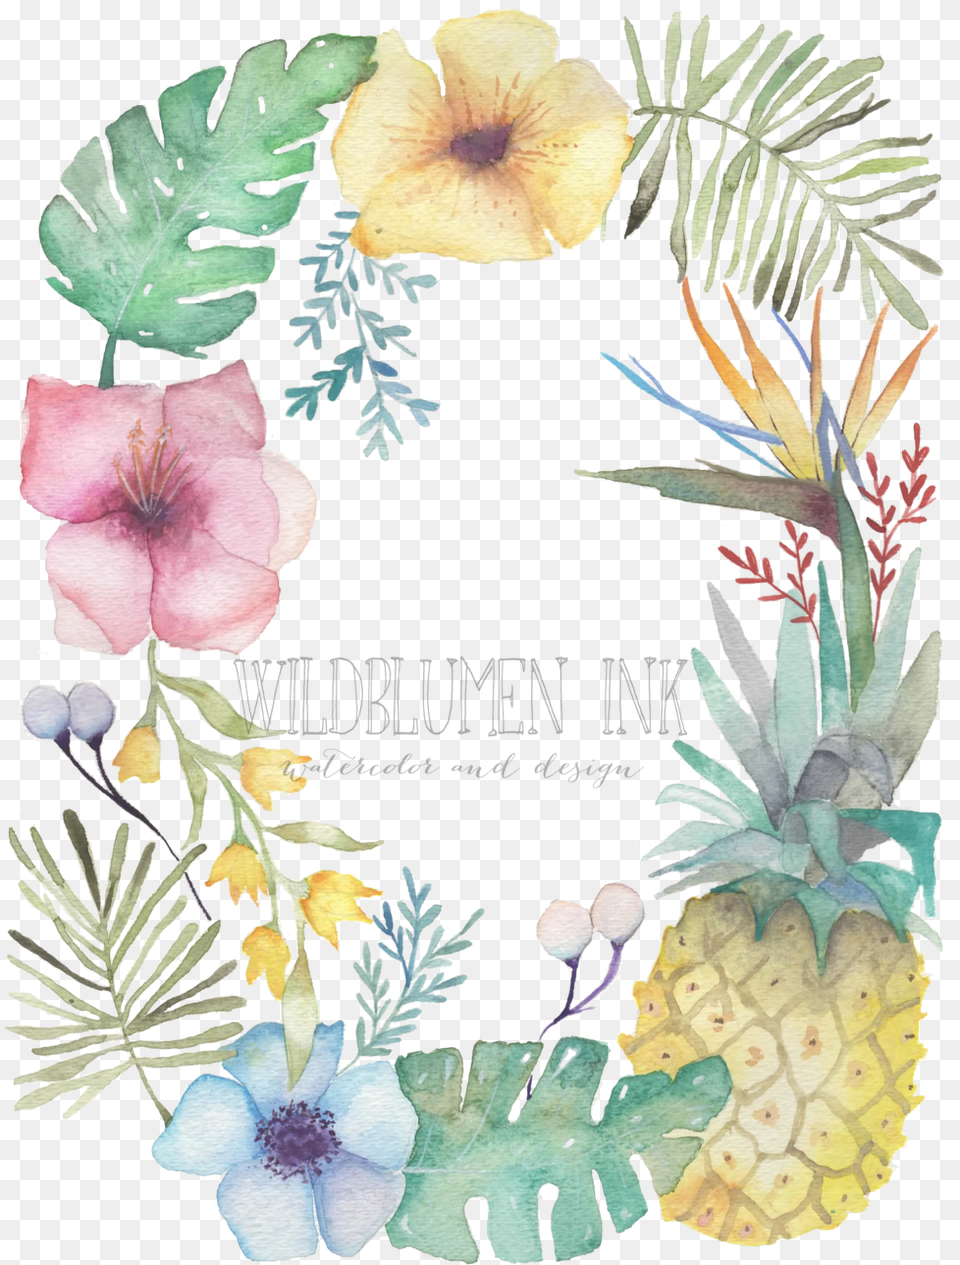 Flowers U2014 Wildblumen Ink Flower Wreath, Art, Collage, Plant, Petal Free Png Download